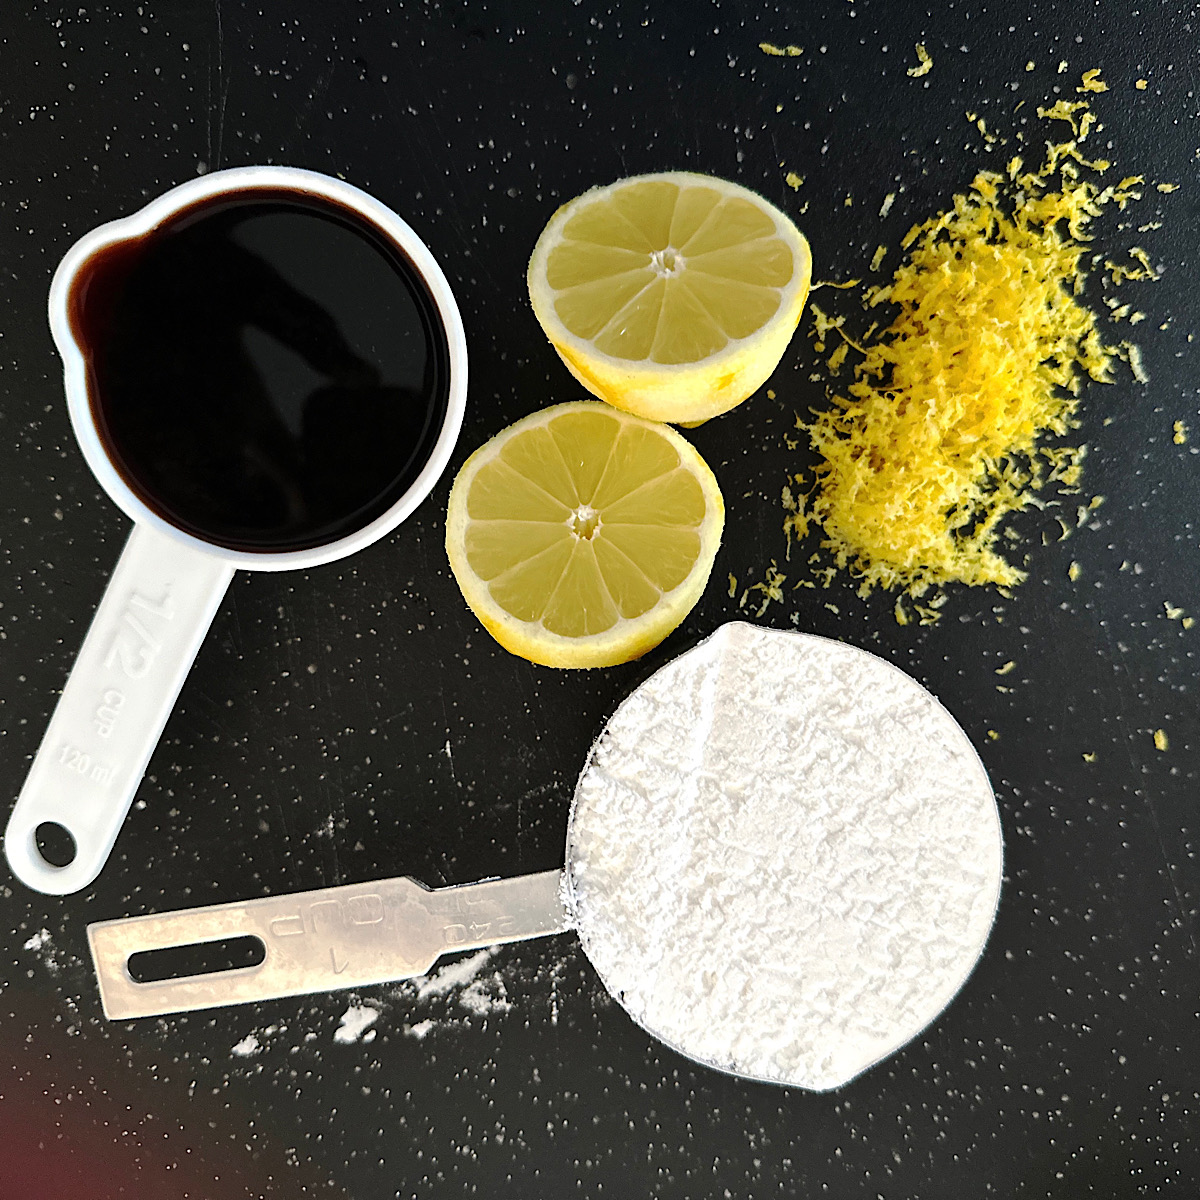 Balsamic vinegar, lemon and lemon zest, powdered sugar on a black surface.